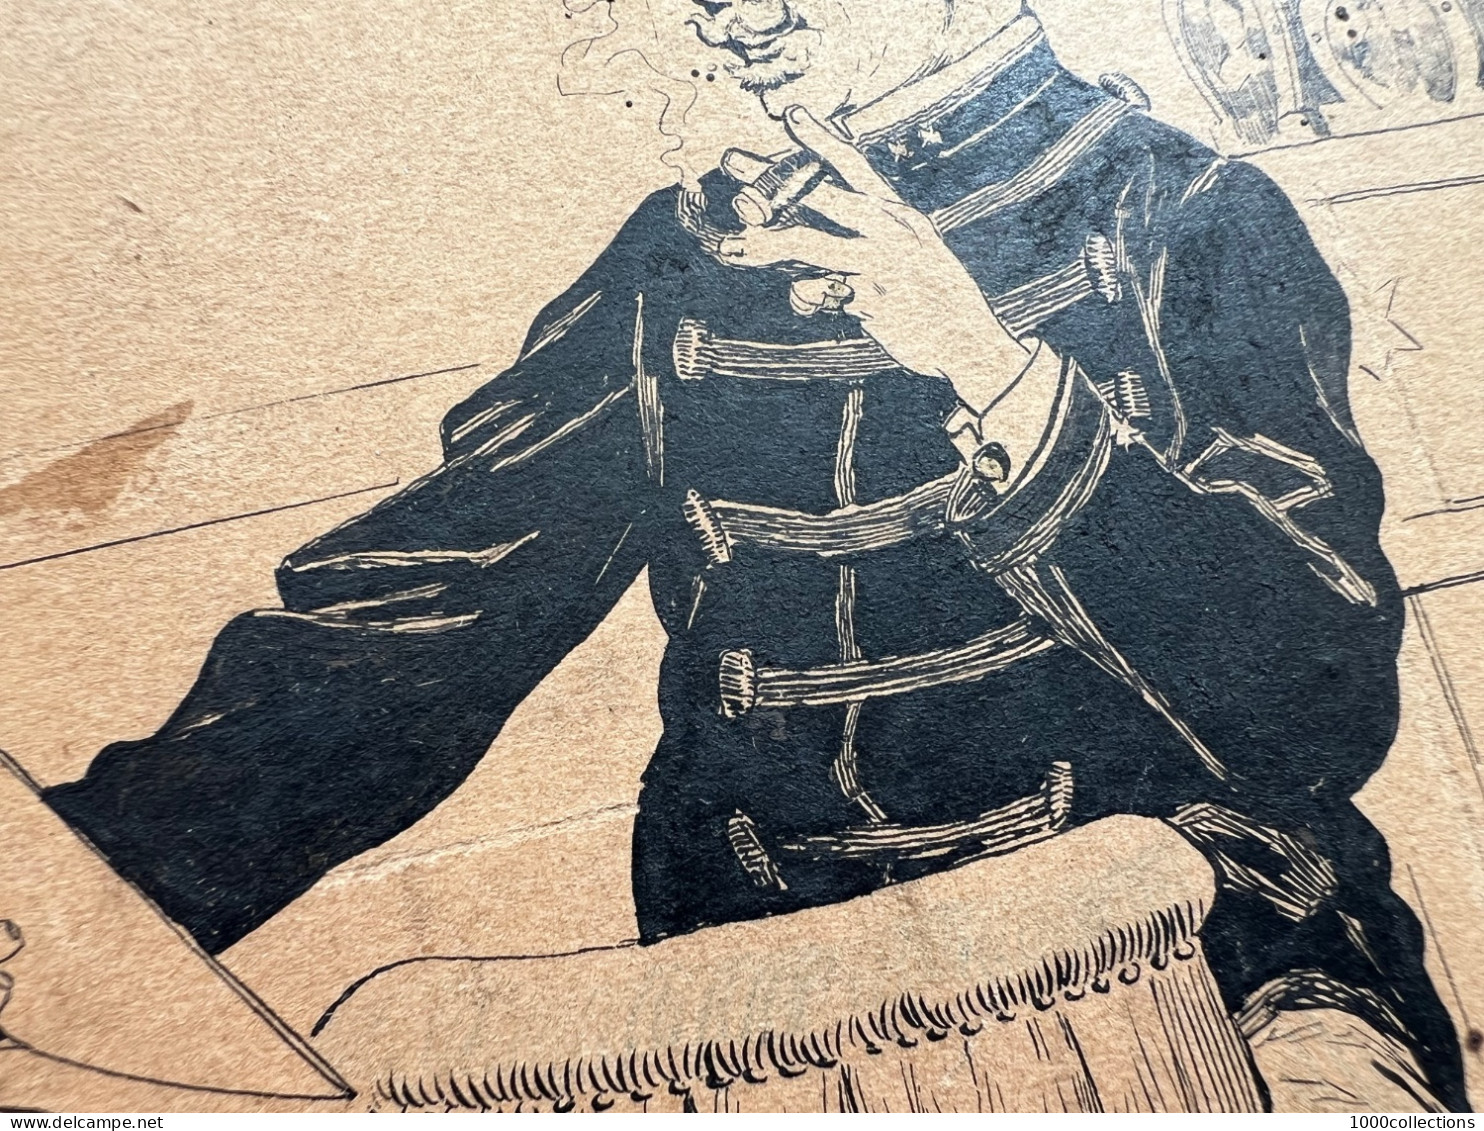 • Beau dessin original signé JOB • Encre et crayon bleu sur carton • Officier Infanterie Napoléon III ? • ca 1890 •